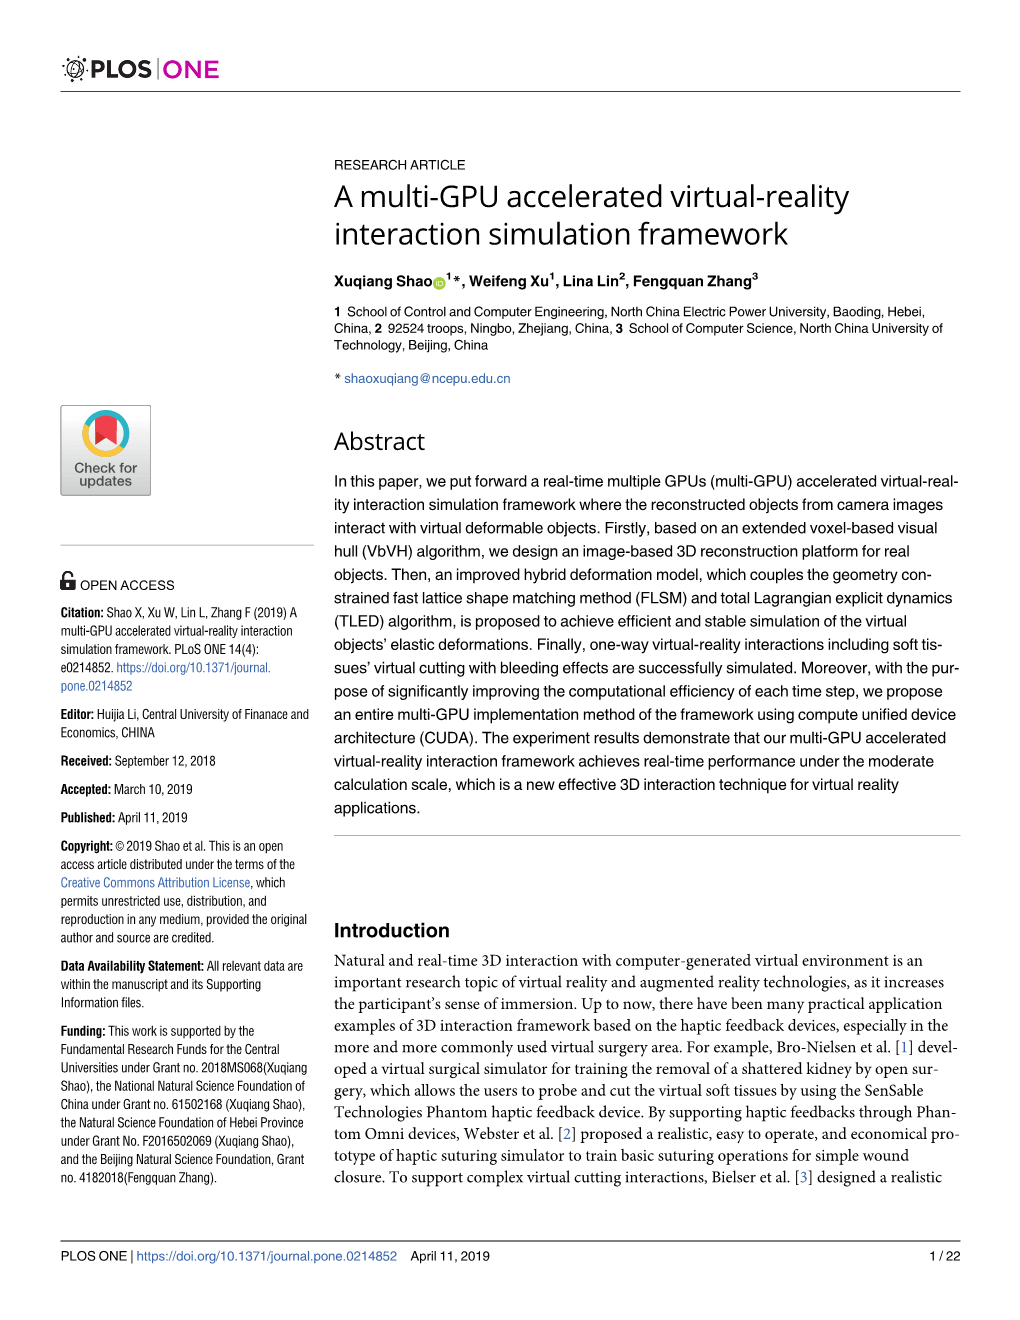 A Multi-GPU Accelerated Virtual-Reality Interaction Simulation Framework